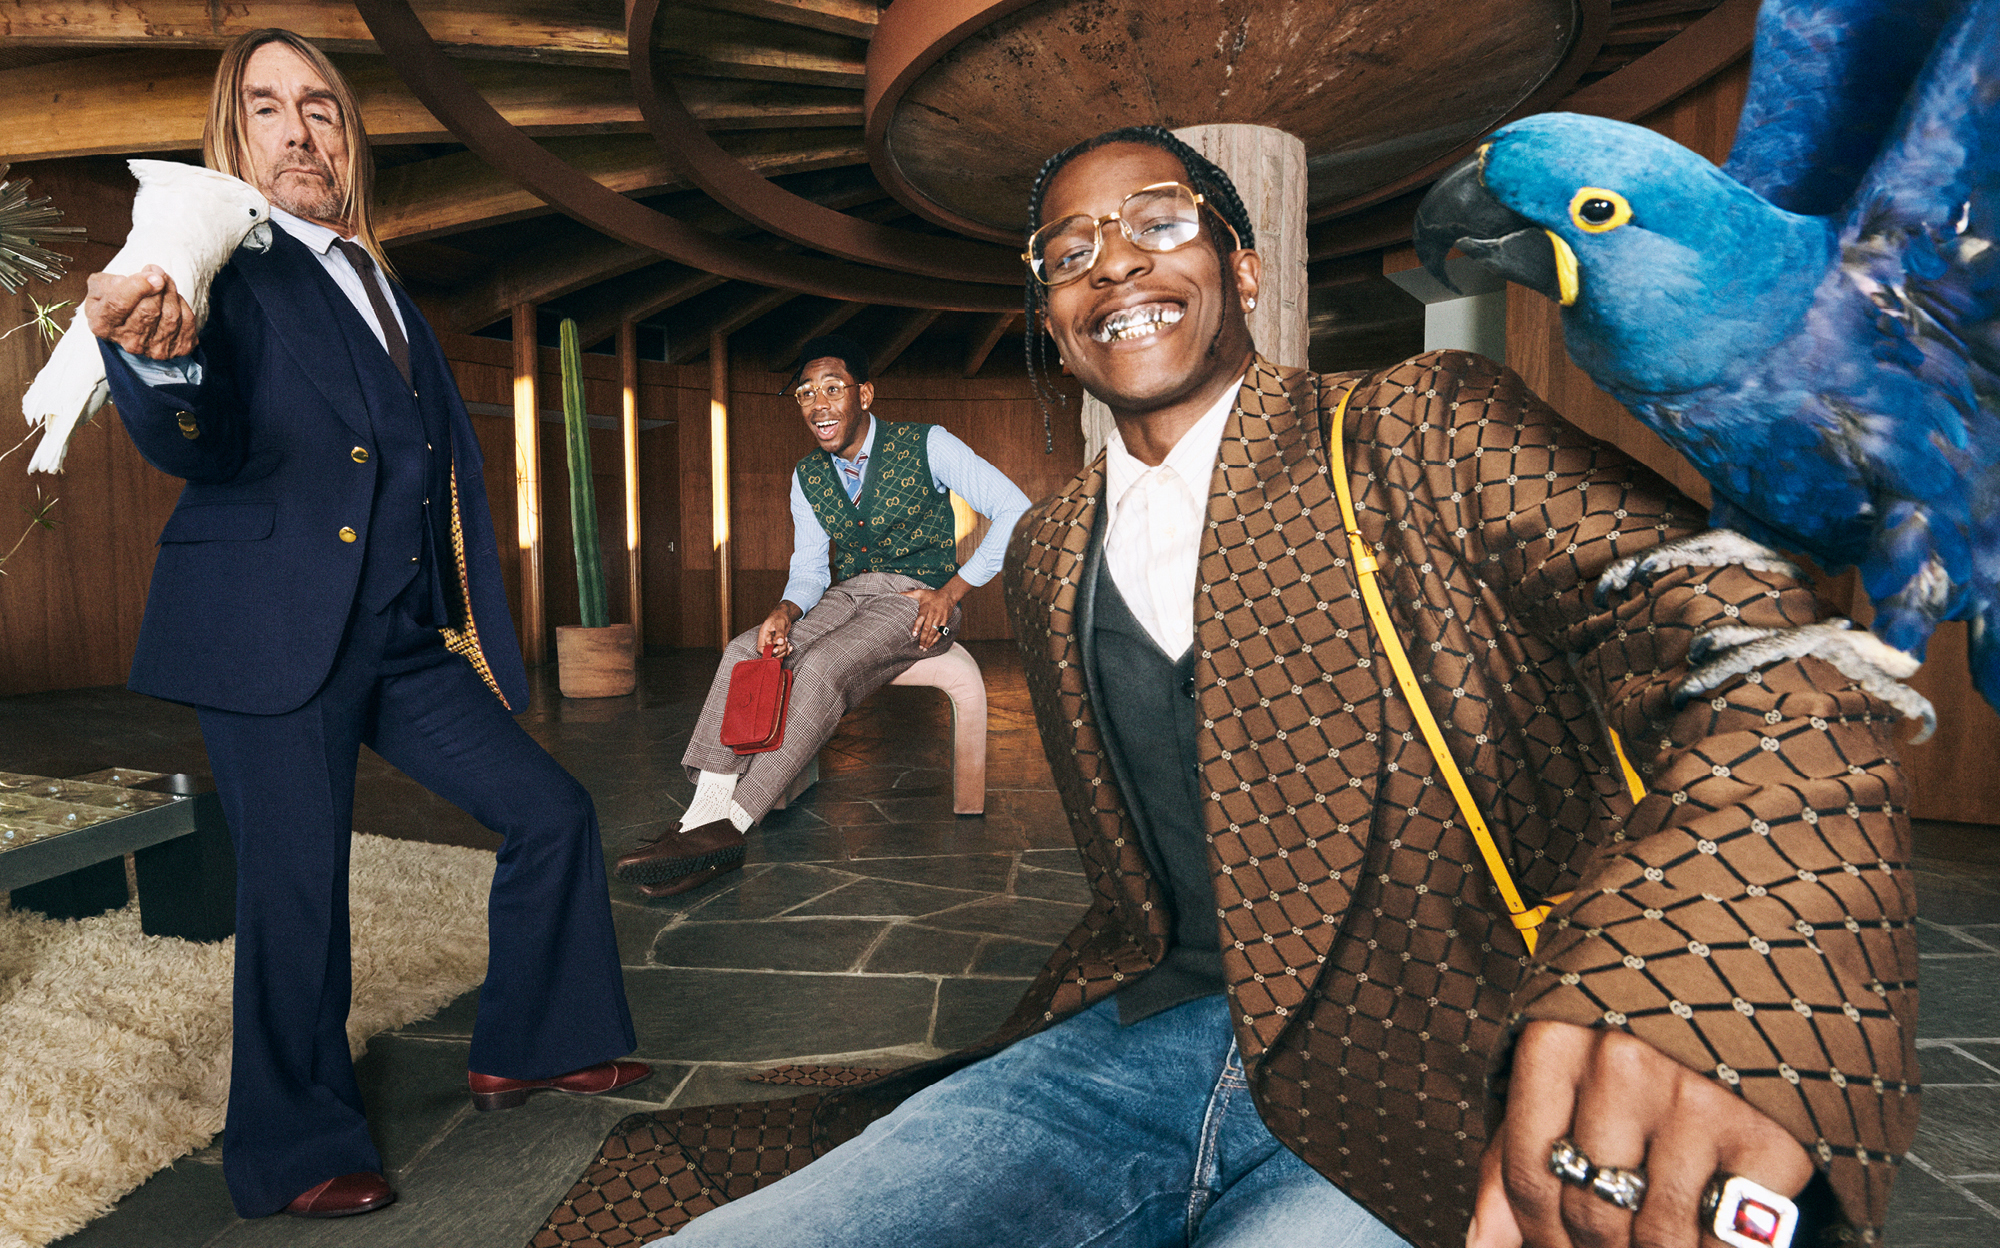 Biggy Pop, Iggy's parrot also stars in the Gucci campaign